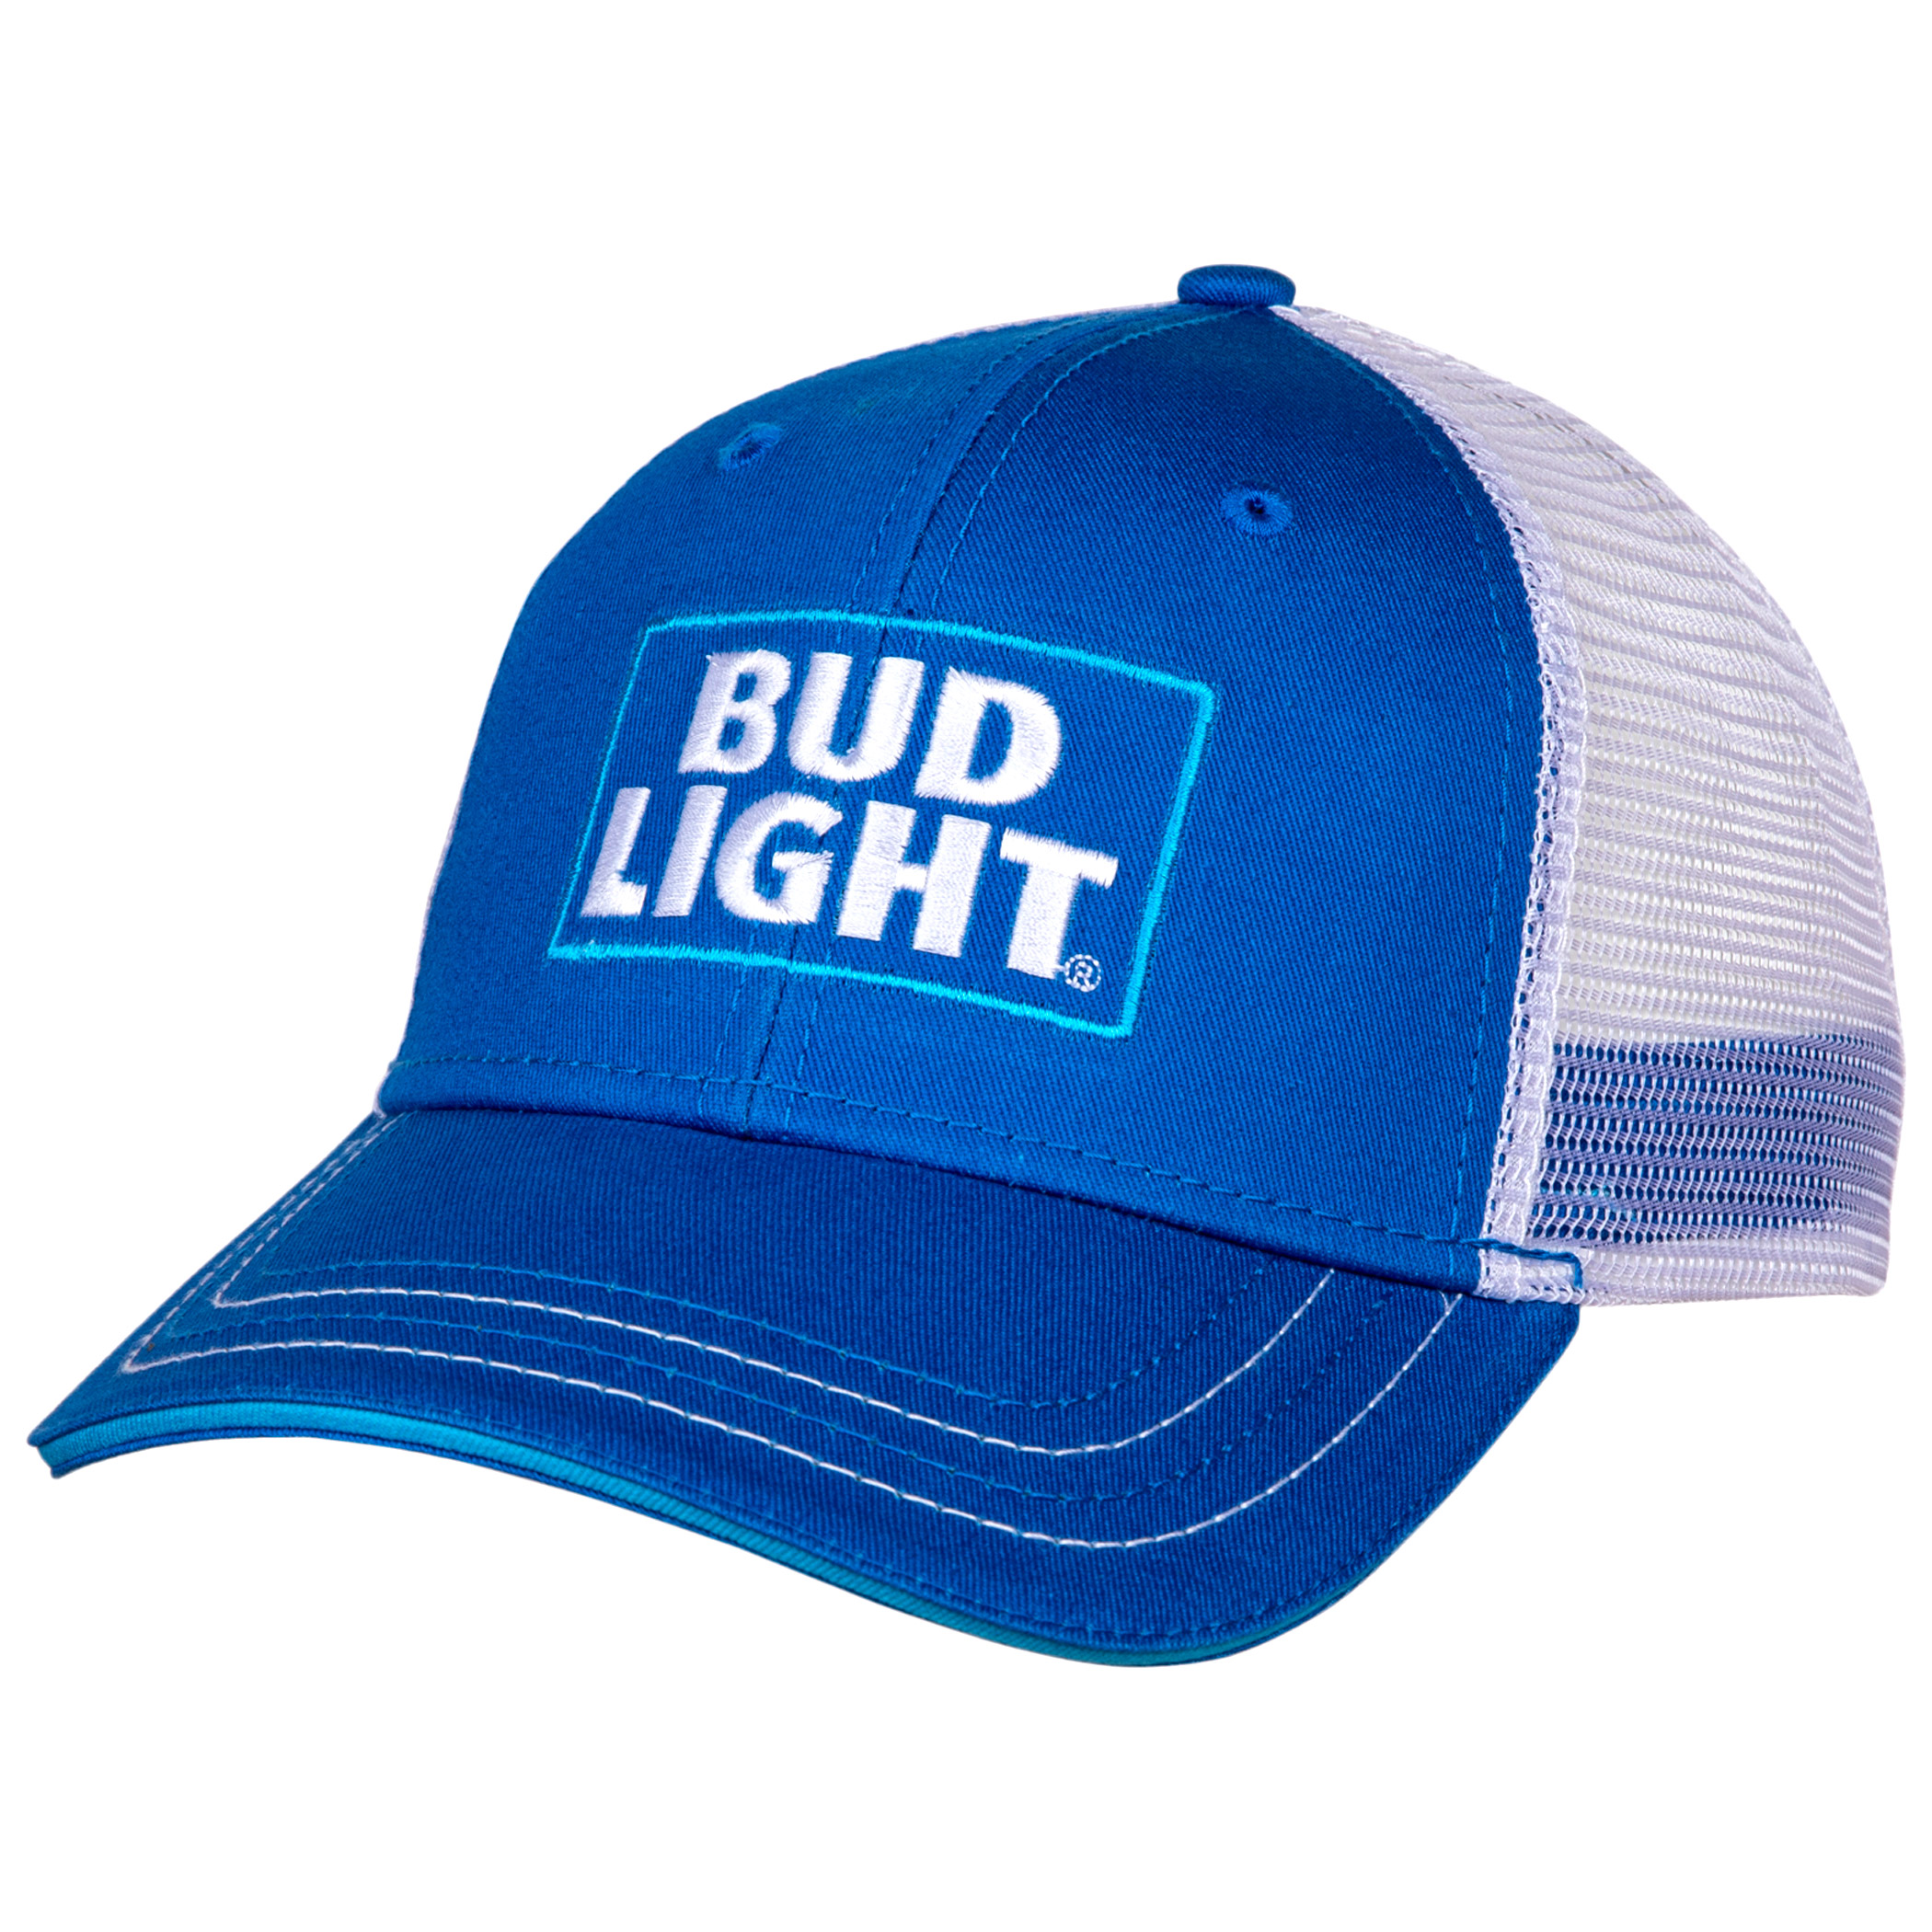 bud light hats